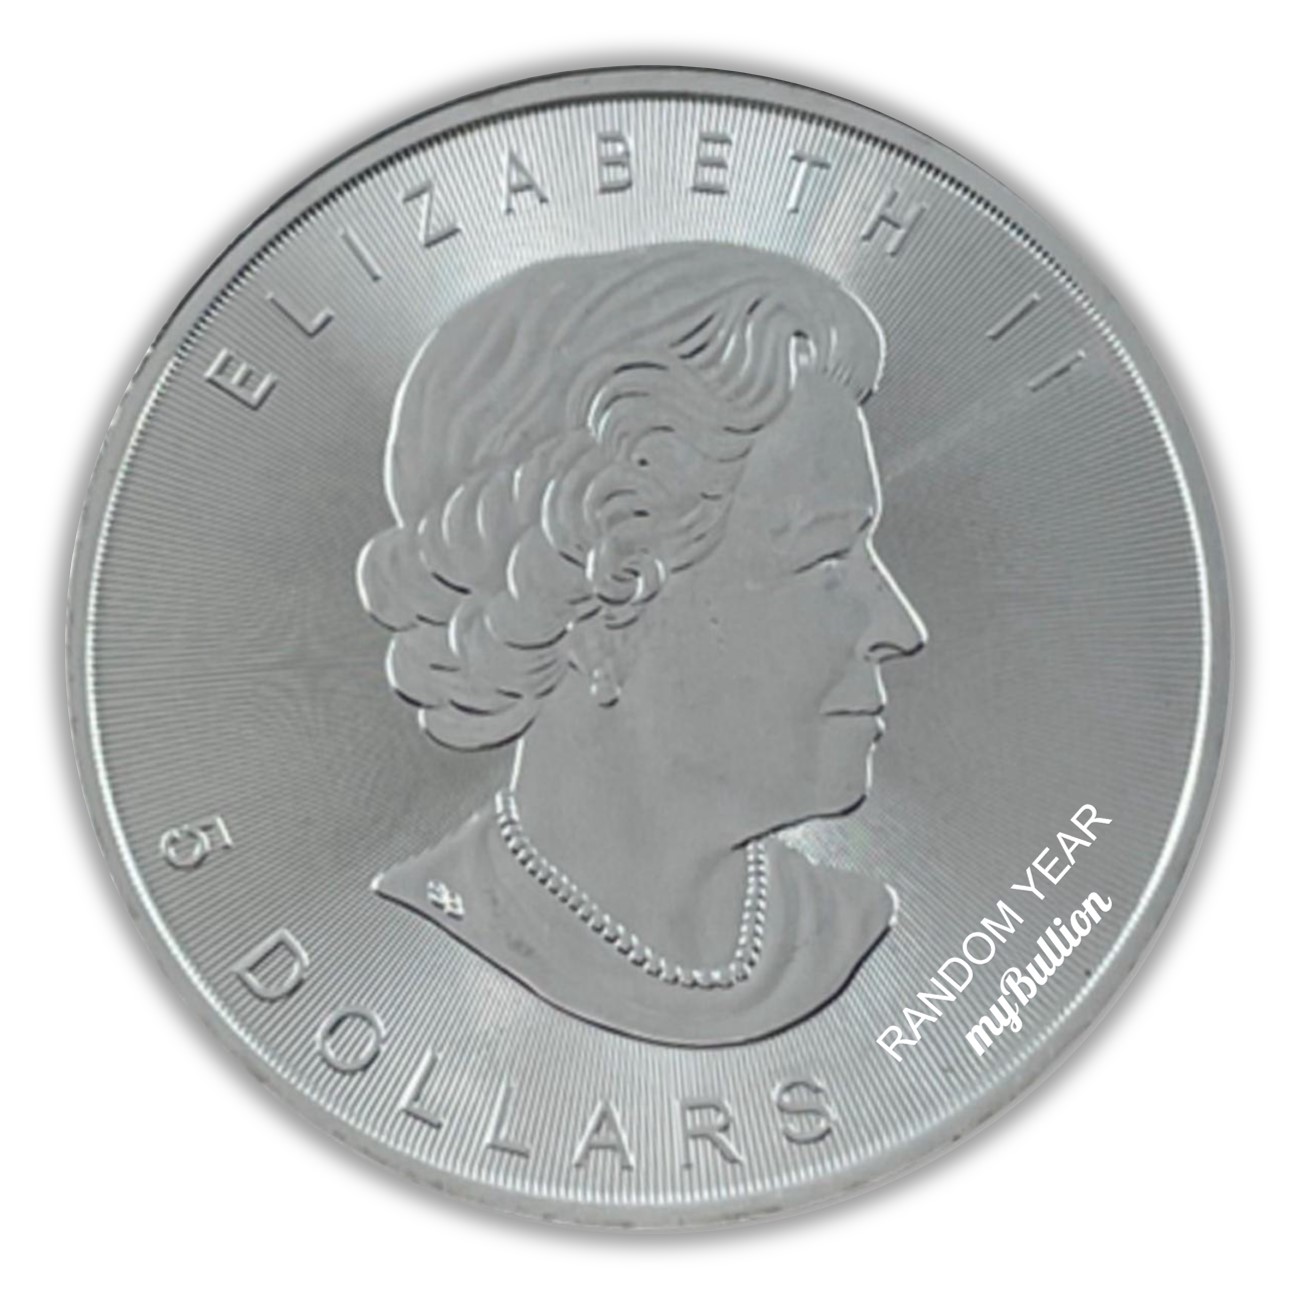 Canadian Maple 1 oz Silver Coin - Random Year